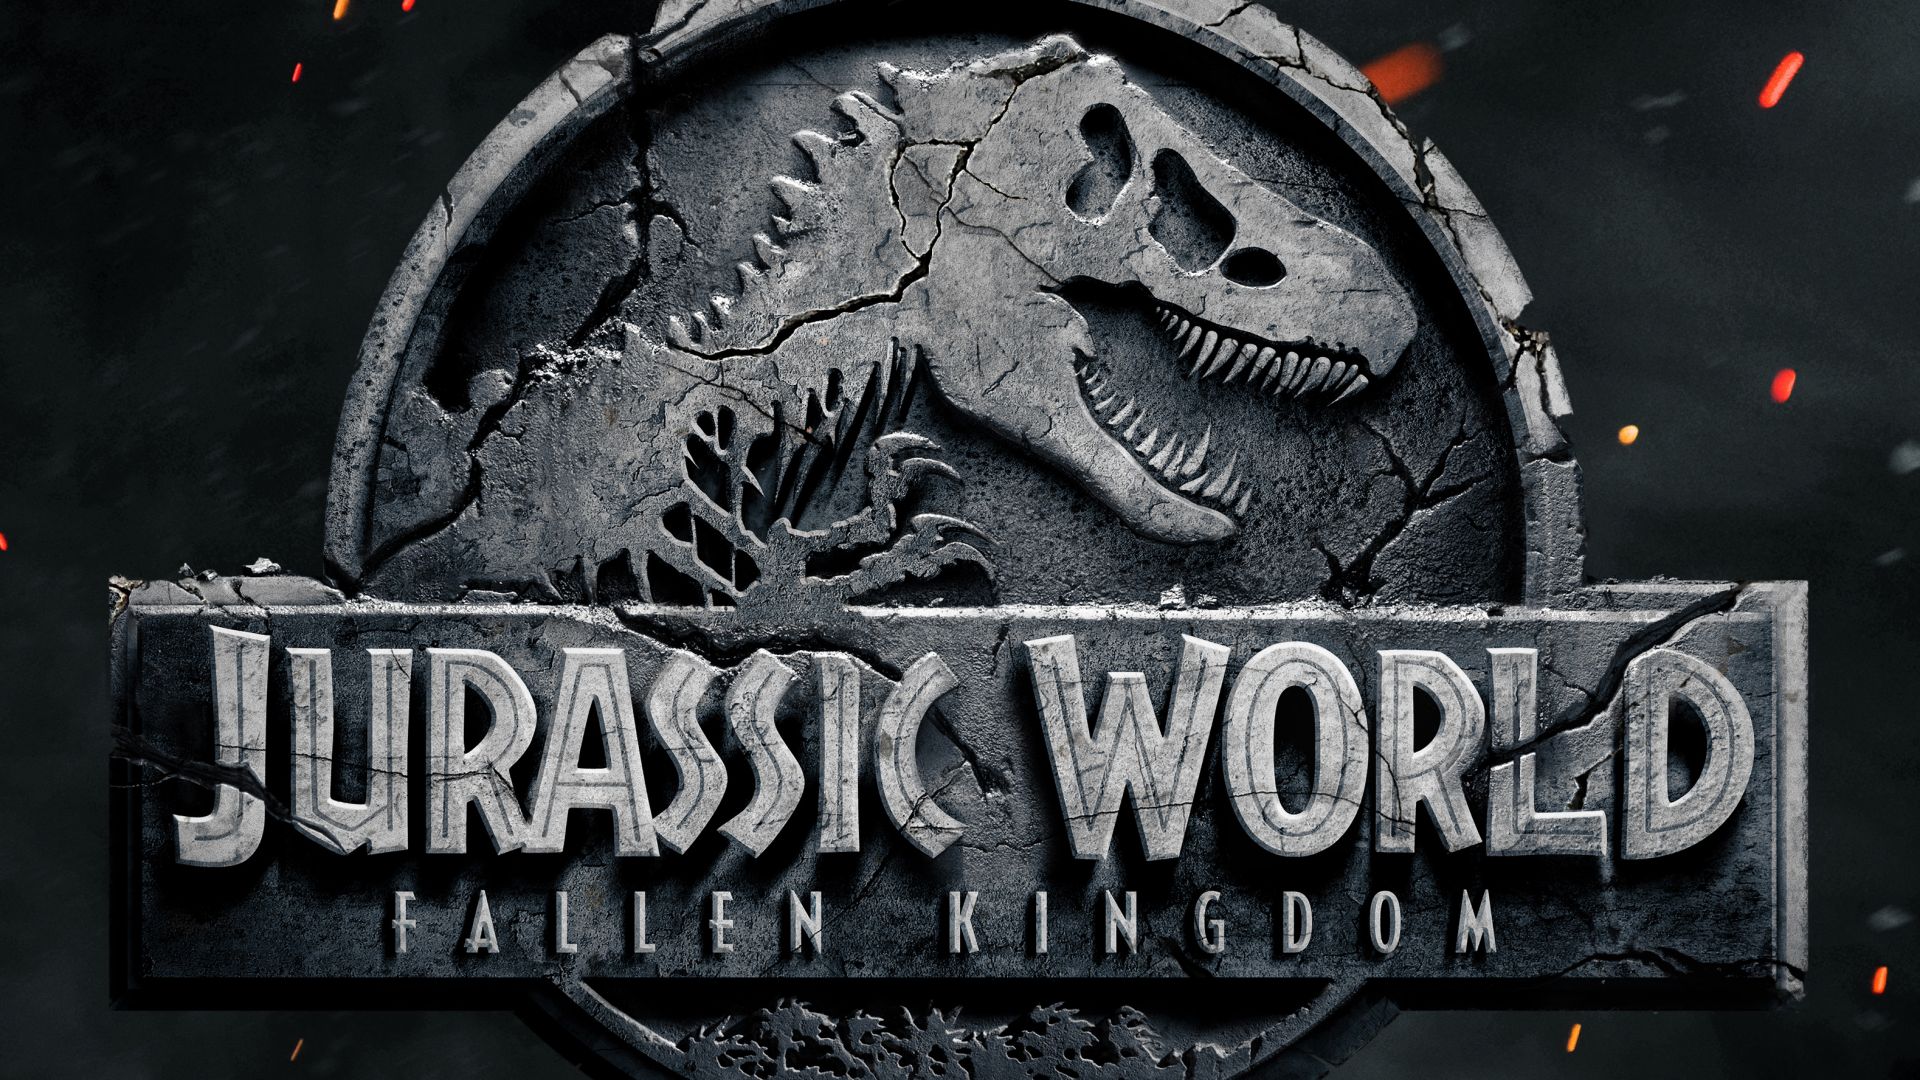 Мир юрского периода 3, Jurassic World: Fallen Kingdom, poster, 4k (horizontal)